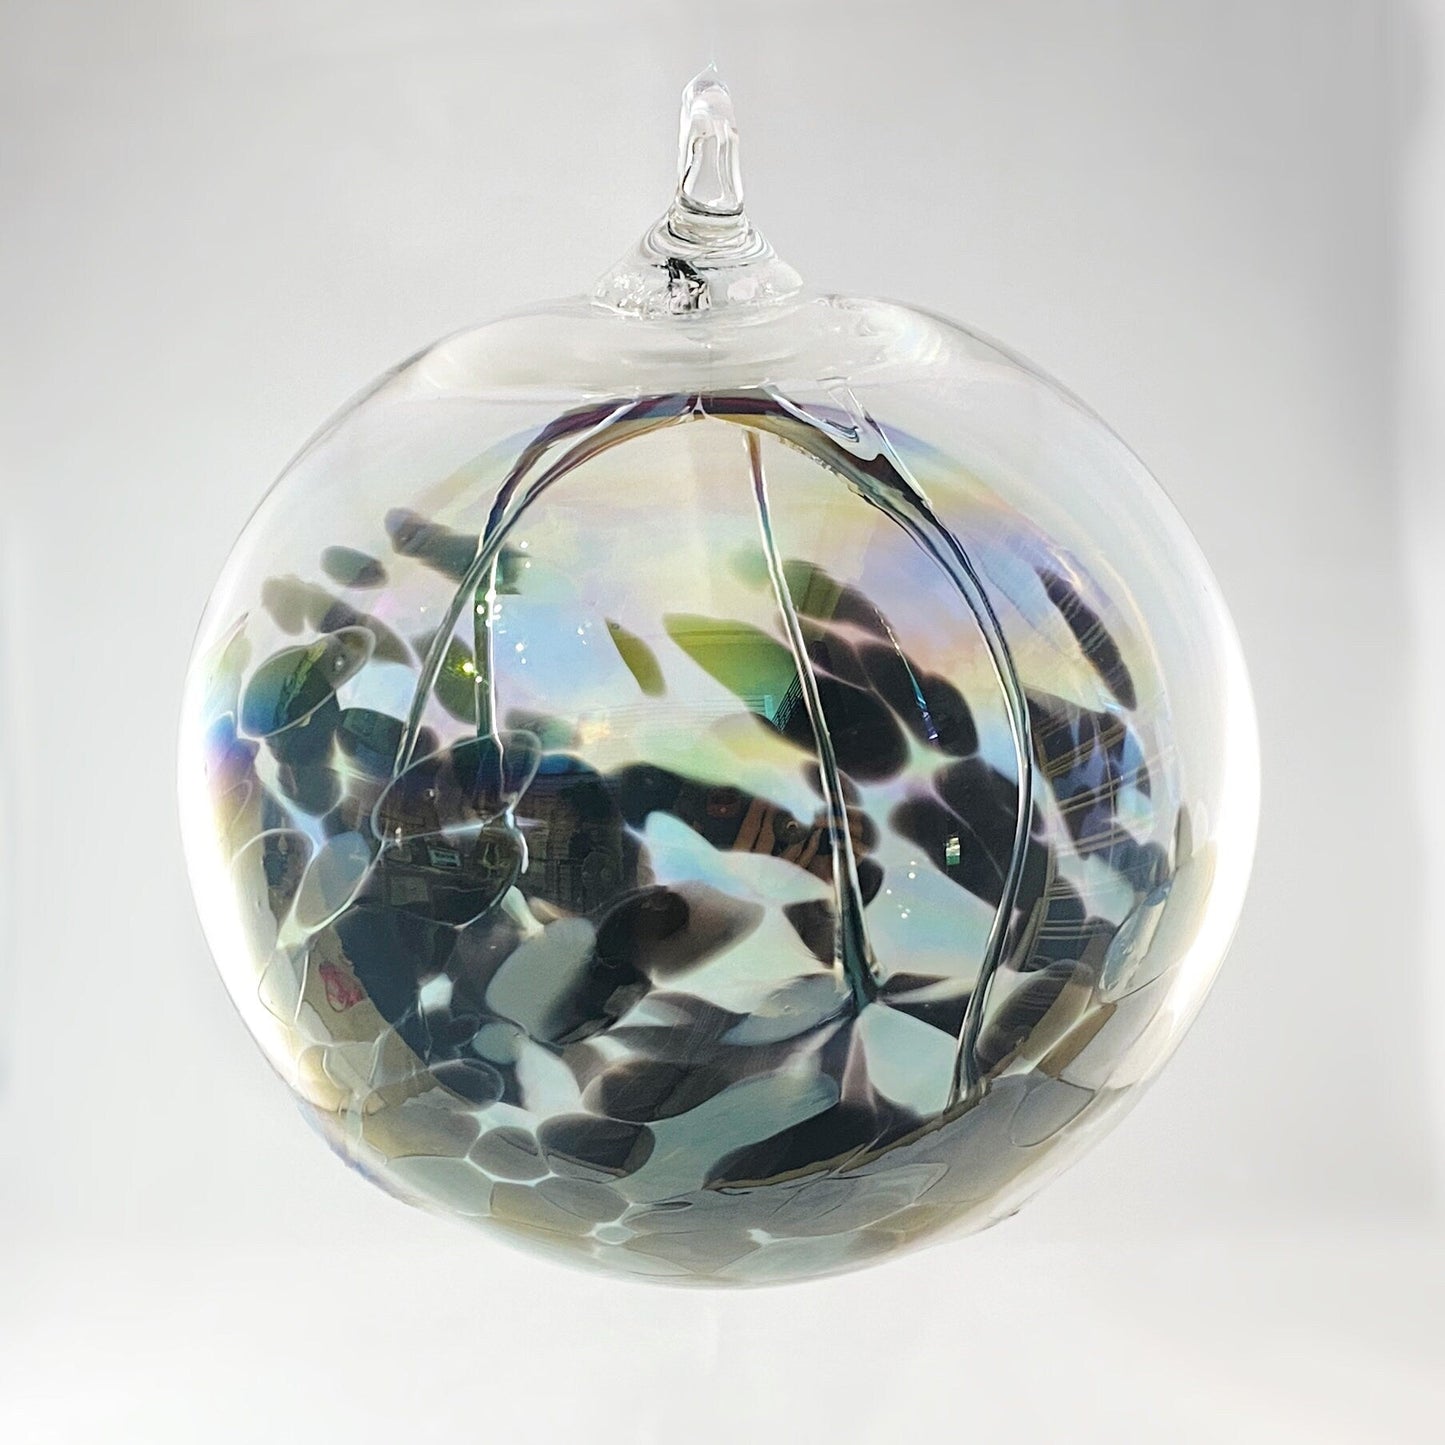 Handmade Glass Witches Ball, #3 - Light Blue/Black (Iridescent)